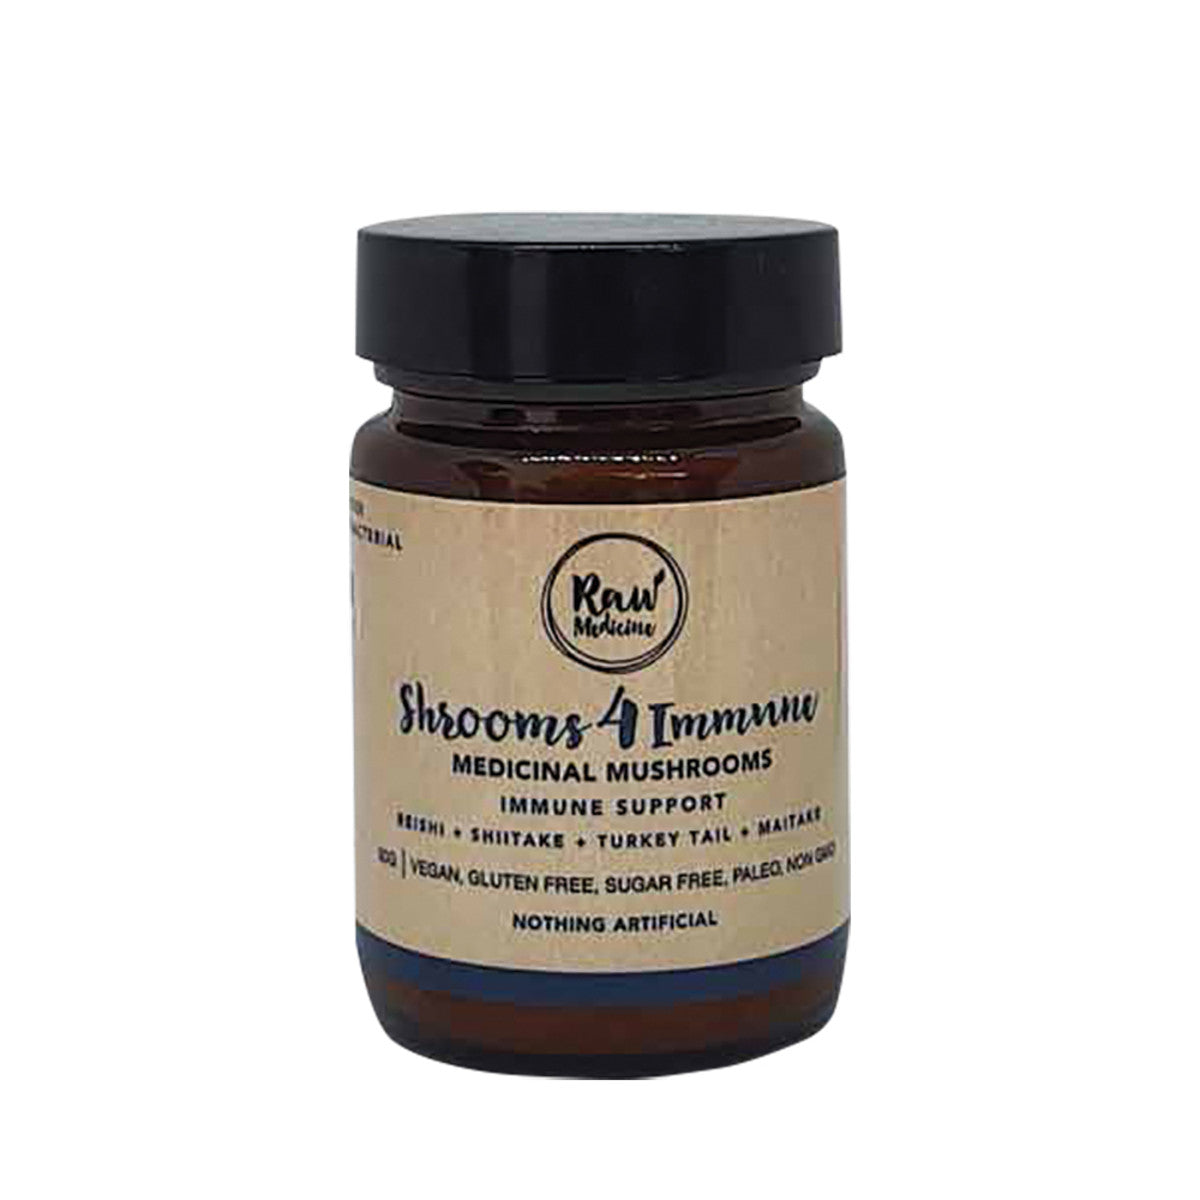 Raw Medicine Medicinal Mushrooms Shroom 4 Immune 50g